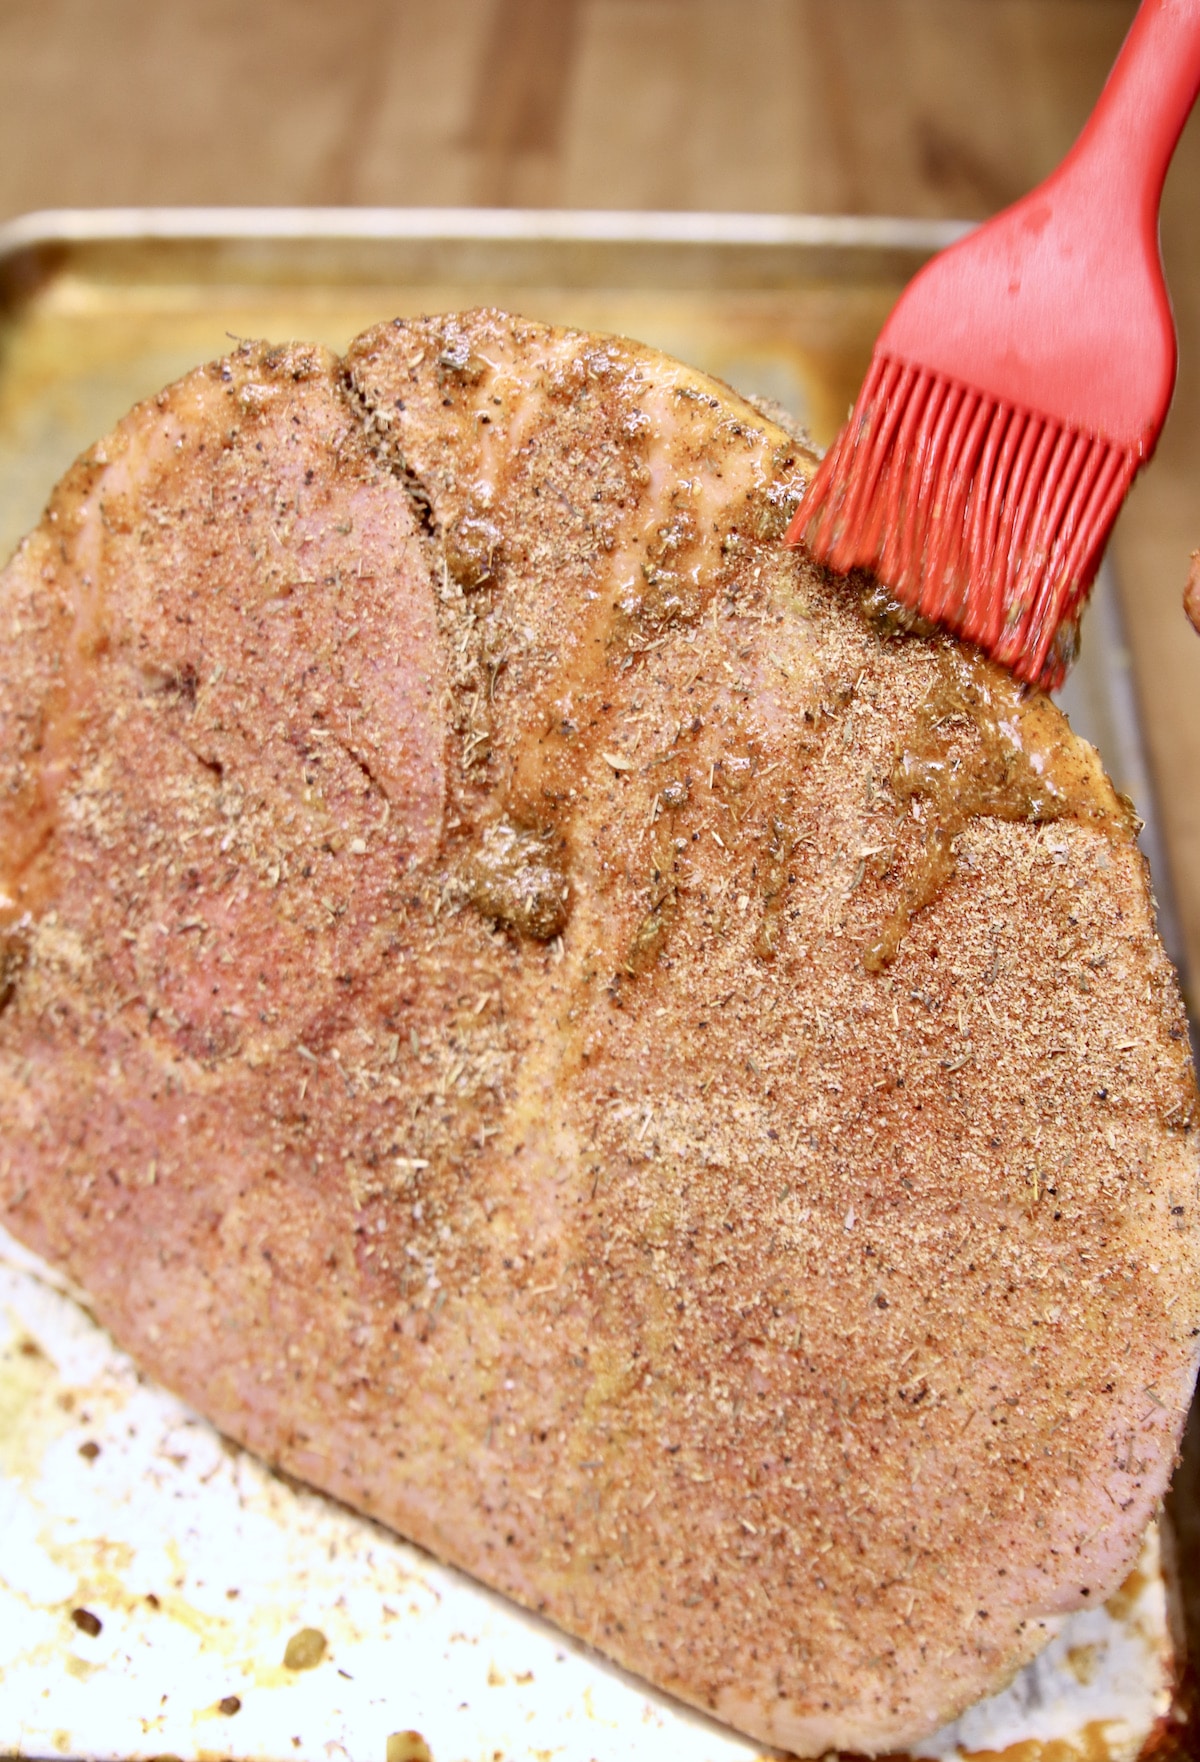 brushing ham with marinade and dry rub.